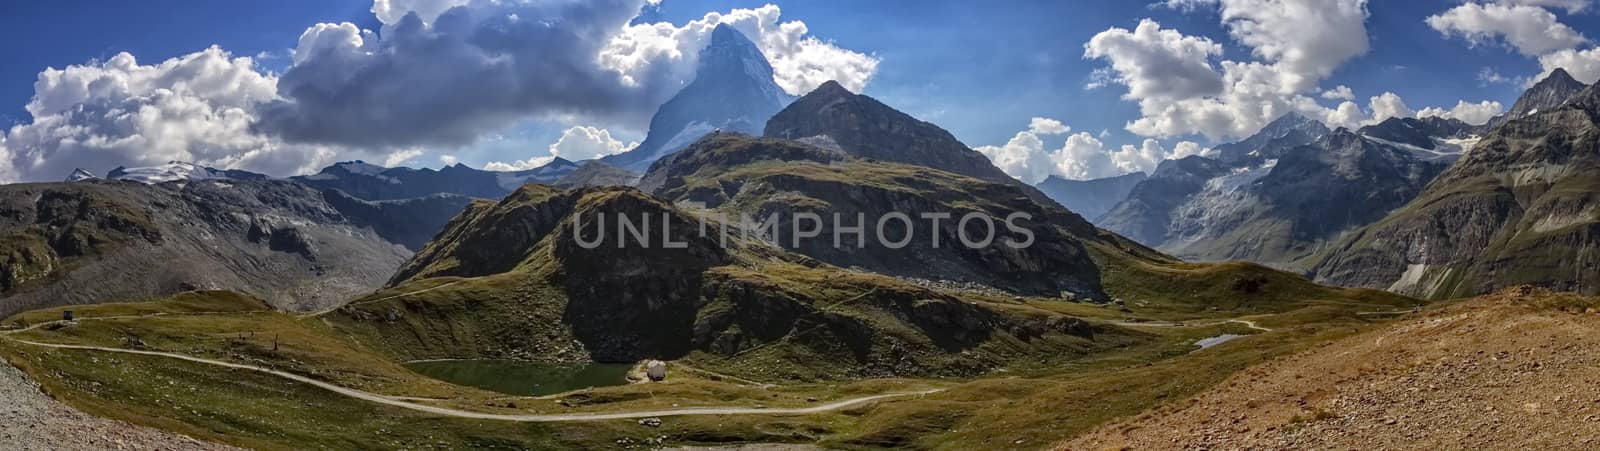 Matterhorn and Alps mountains panorama, Switzerland by Elenaphotos21